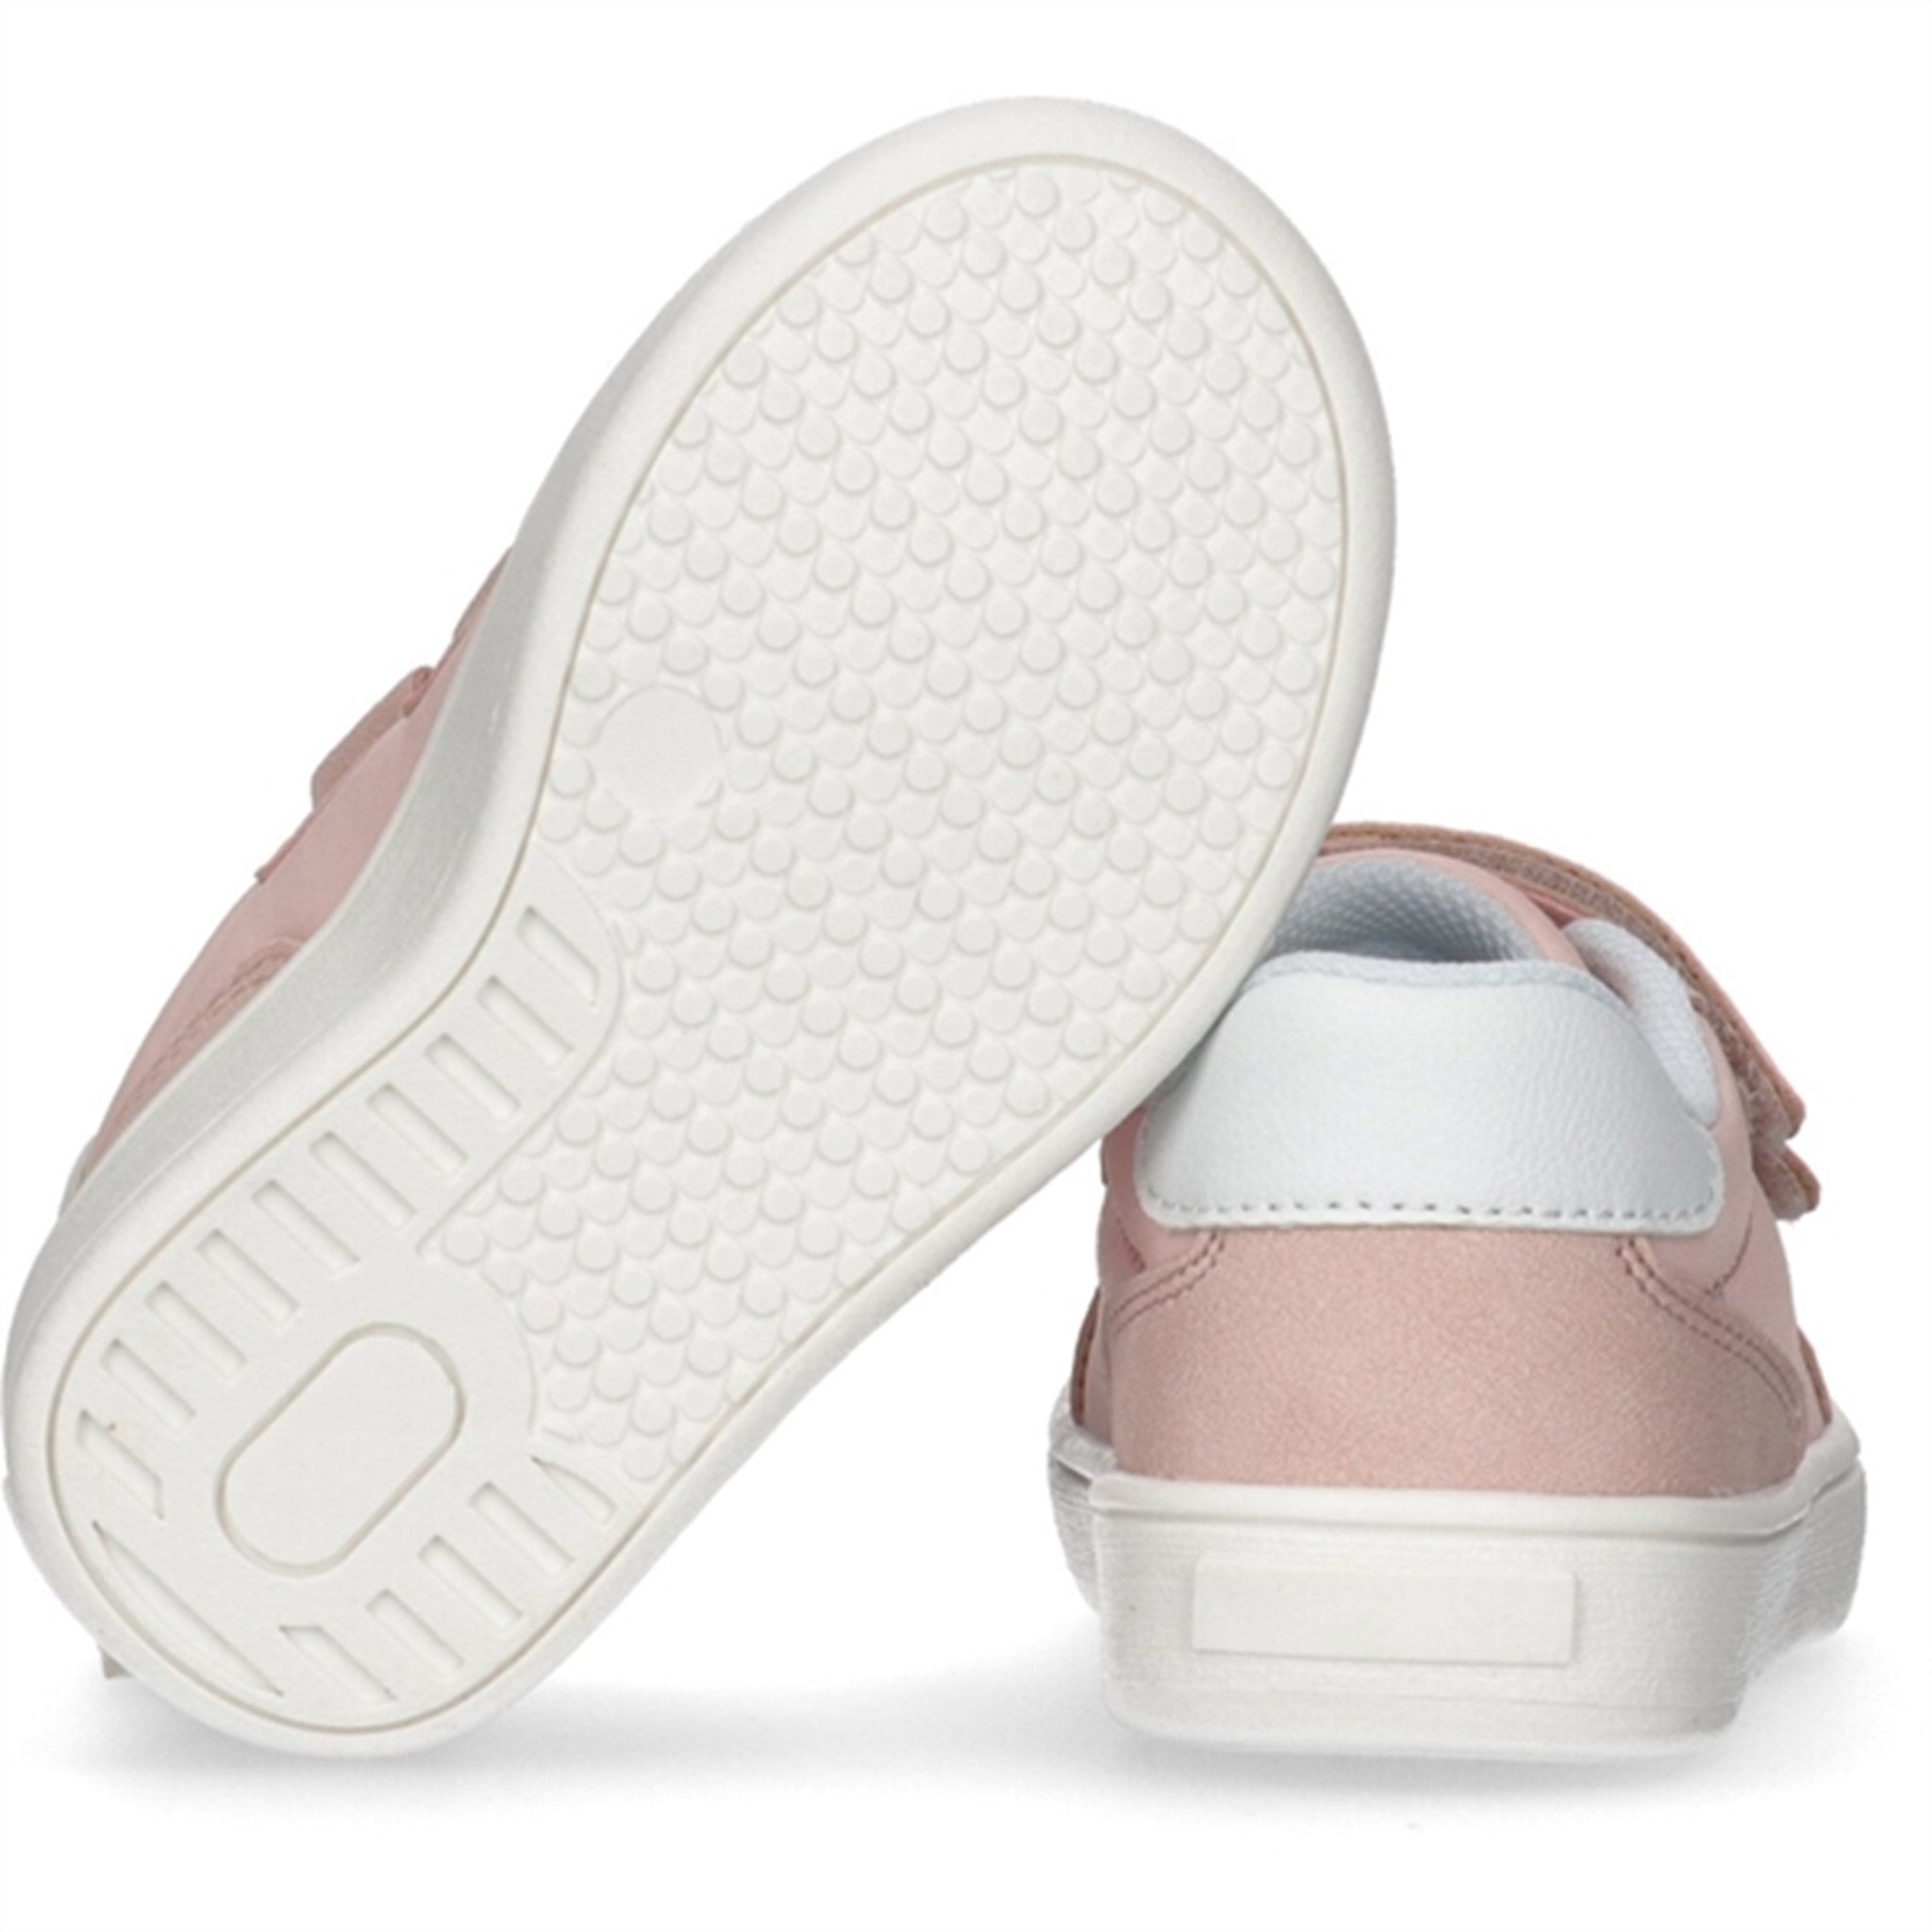 Tommy Hilfiger Low Cut Velcro Sneaker Pink/White 4